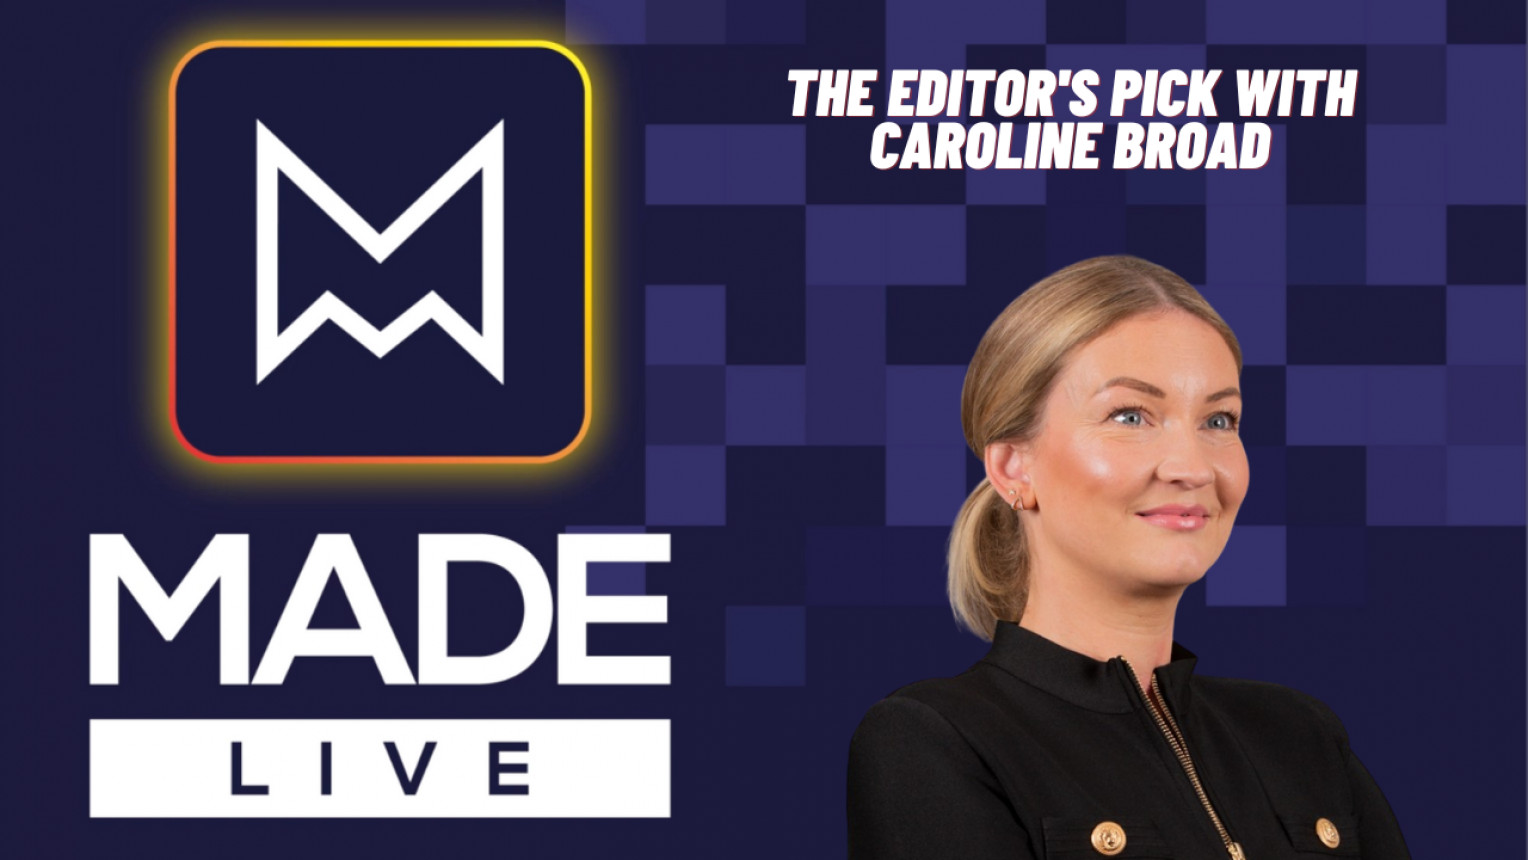 Made LIVE TV: The Editor's Pick with Caroline Broad